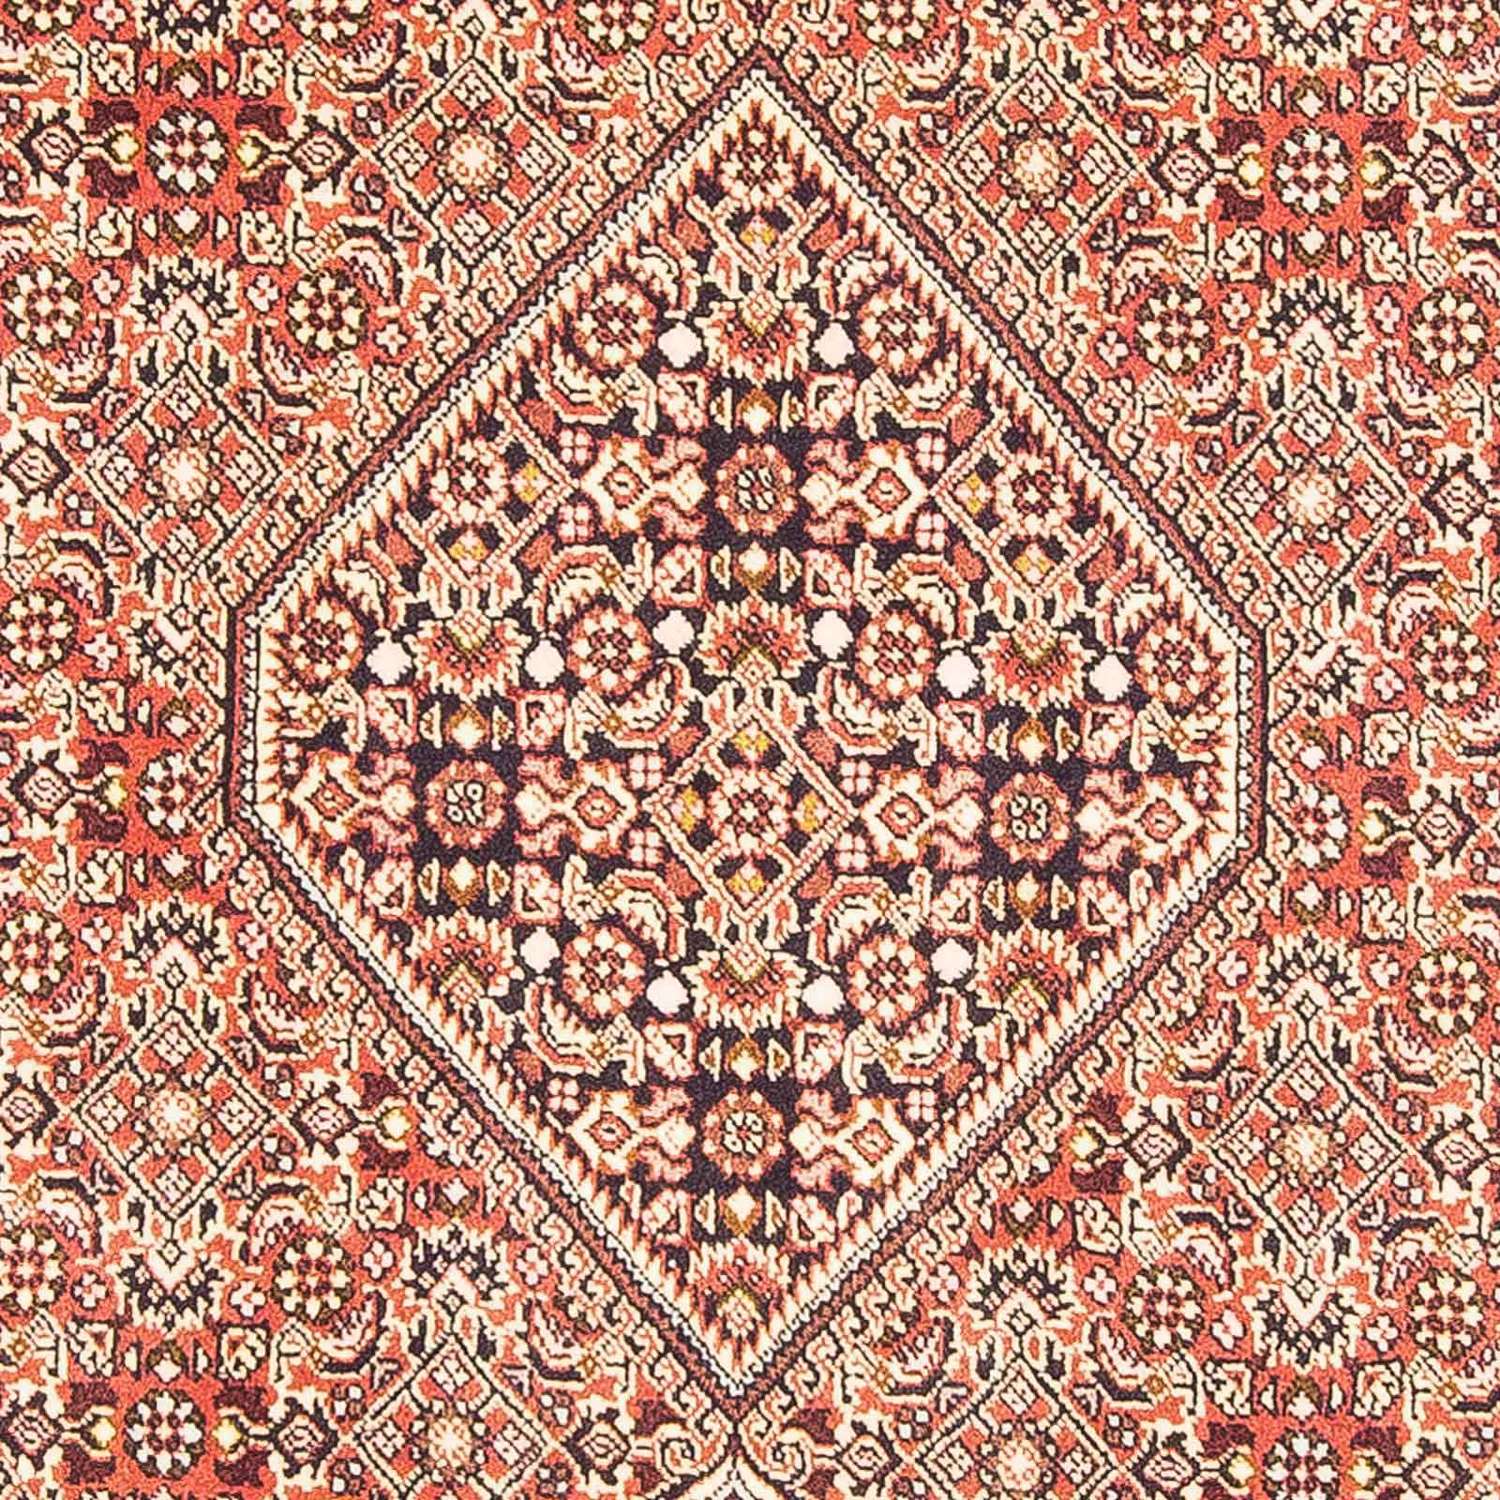 Perzisch tapijt - Bijar - 176 x 110 cm - licht rood